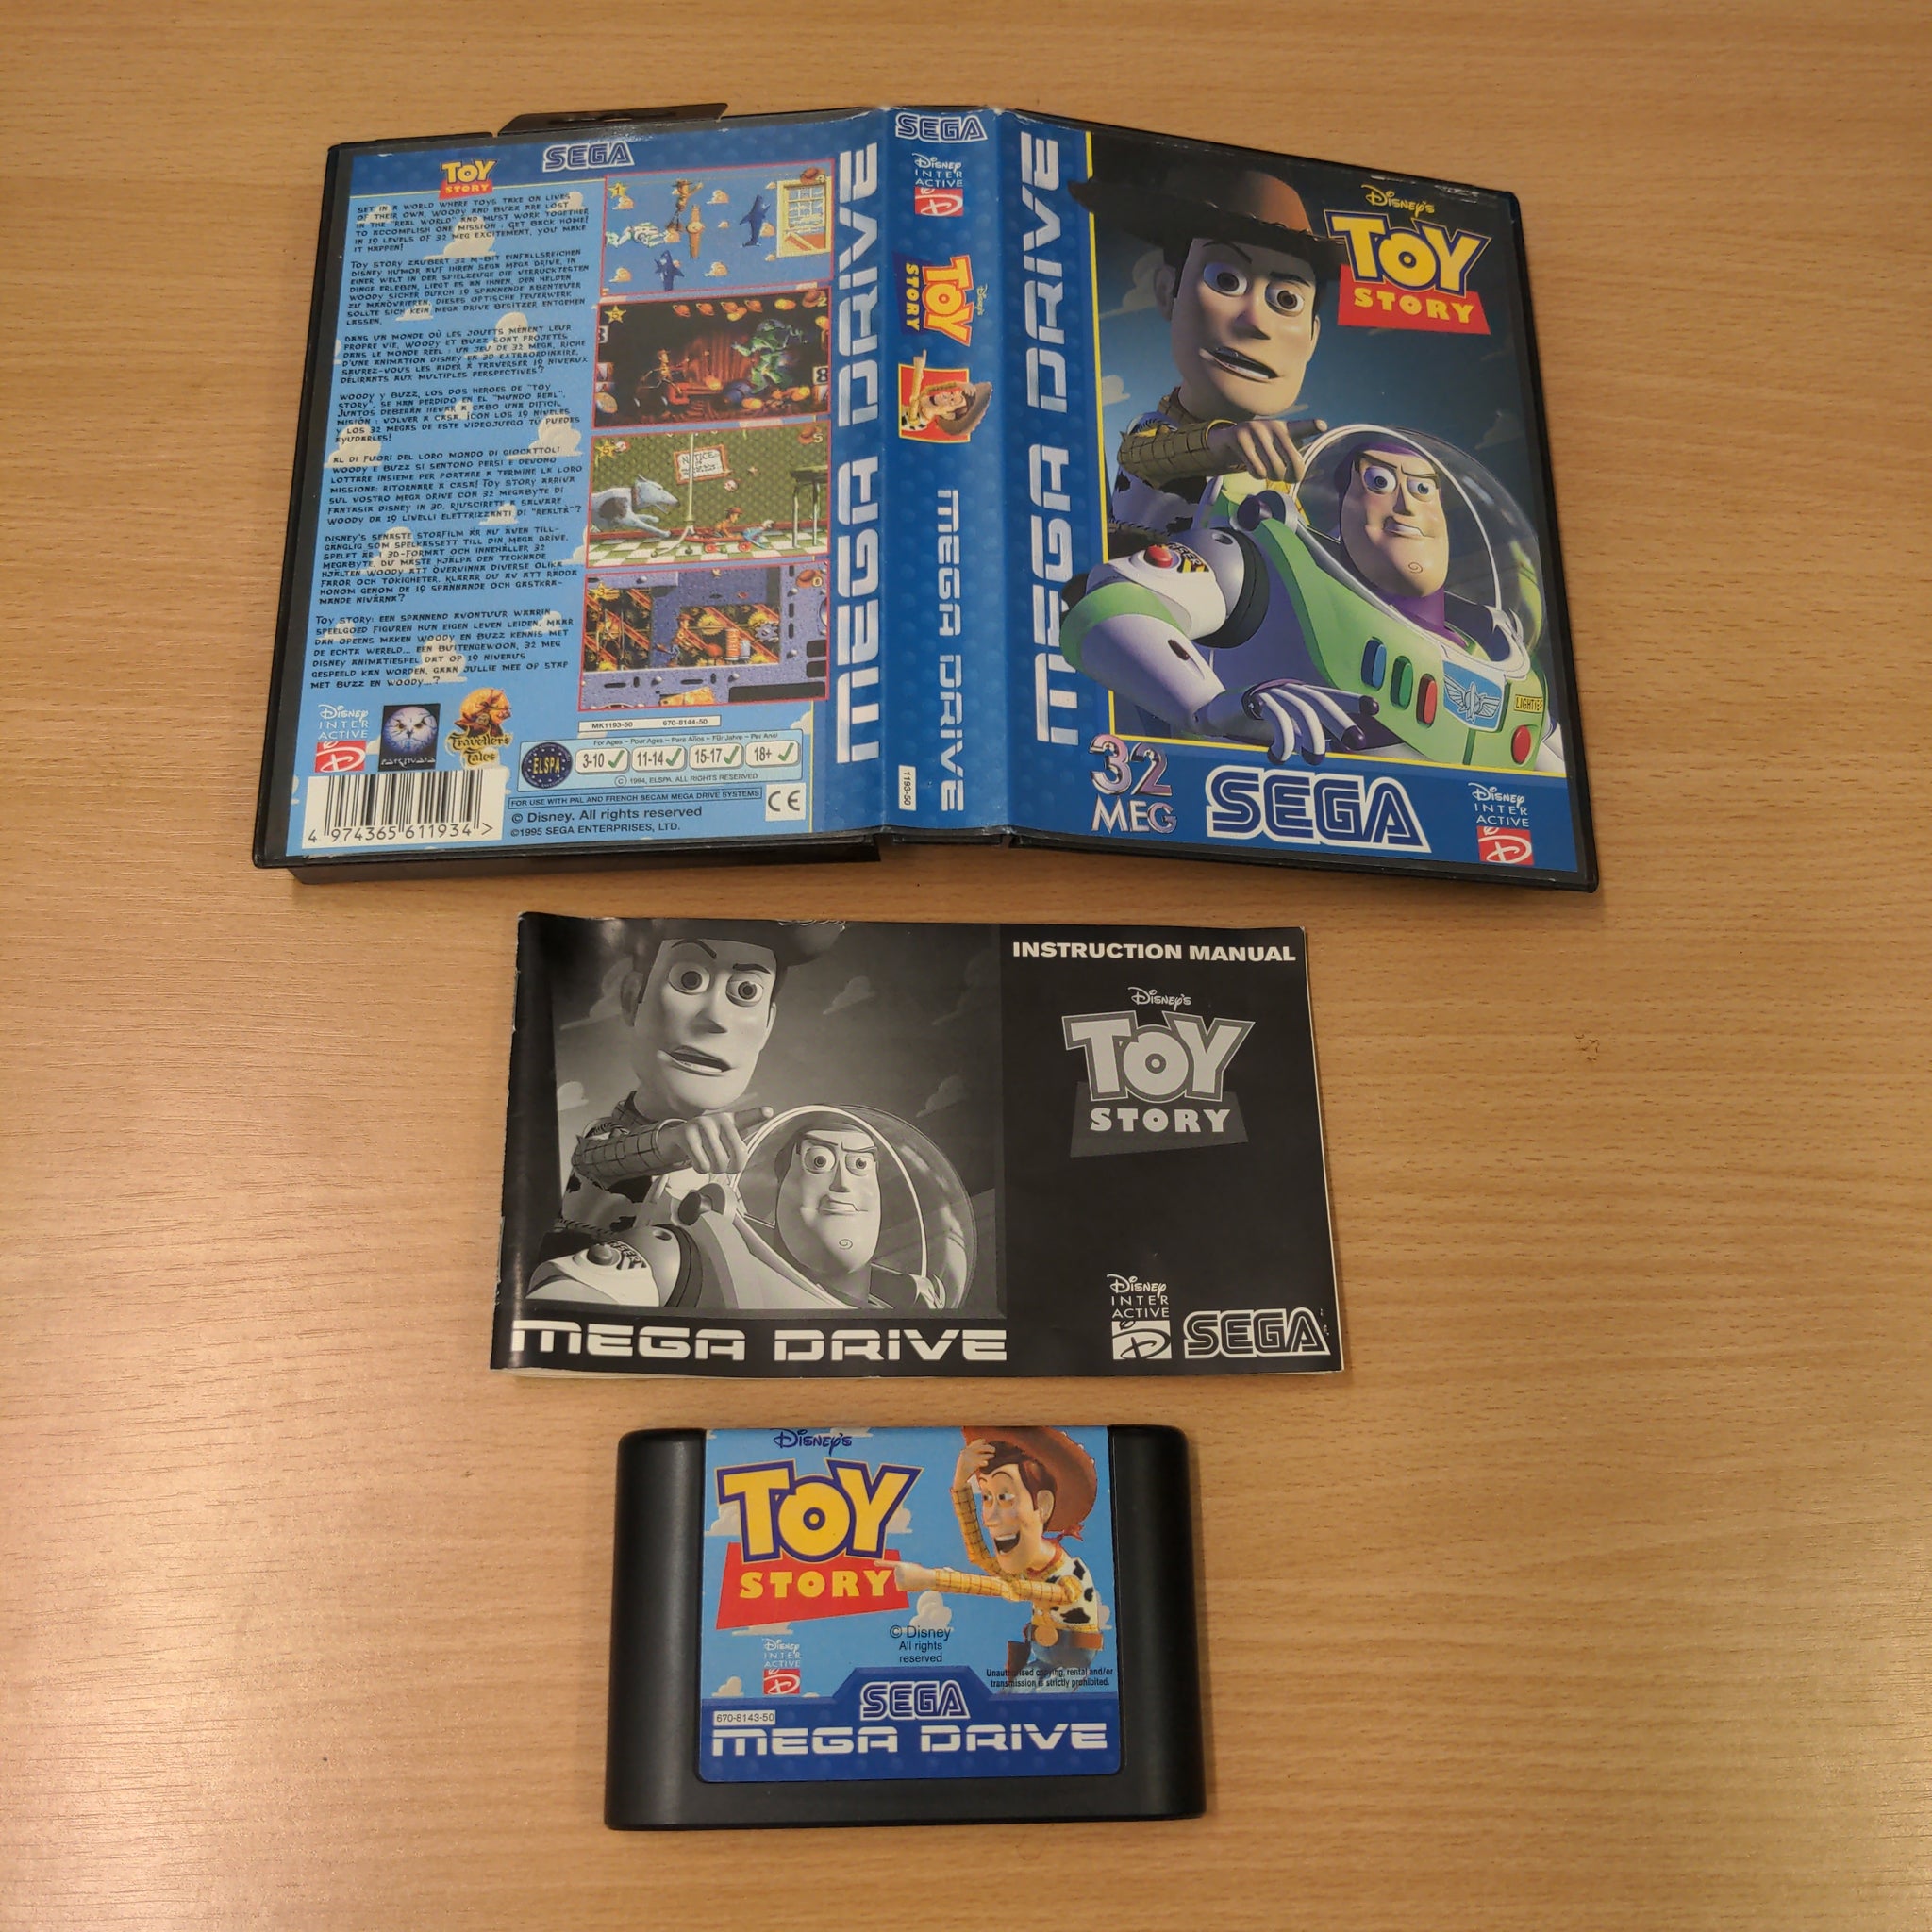 Toy Story (Disney's) Sega Mega Drive game complete